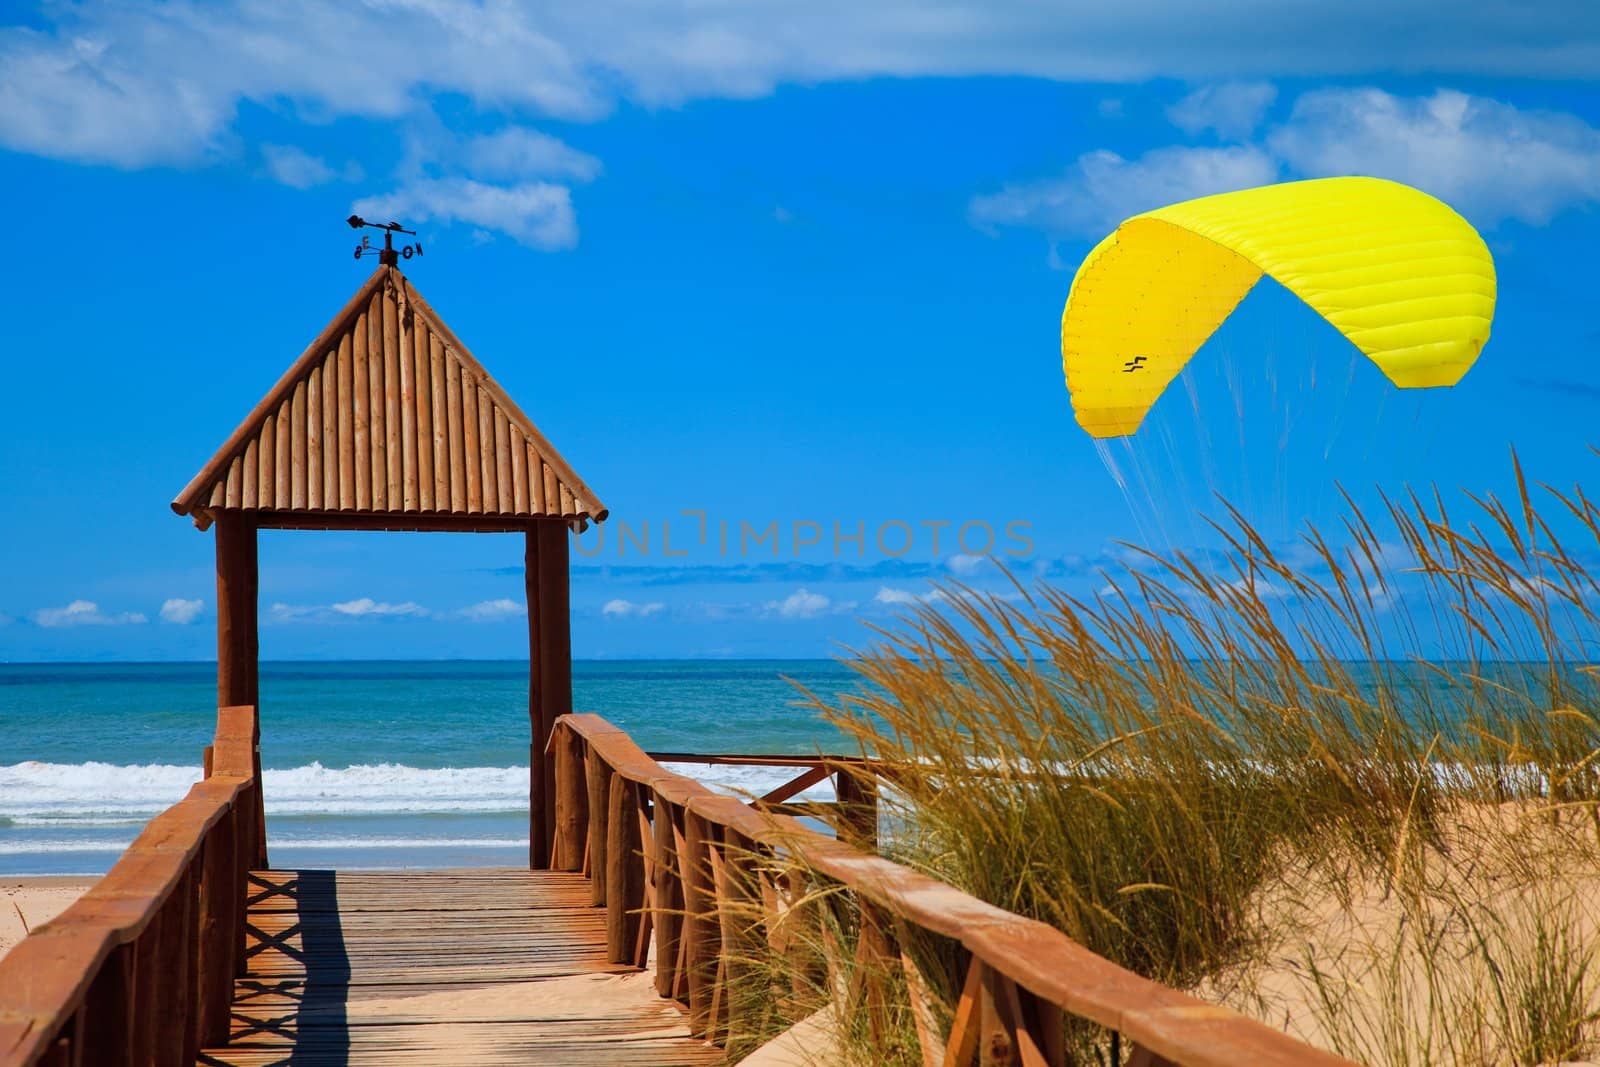 Footbridge of access to Cortadura's beach in Cádiz and paraglider